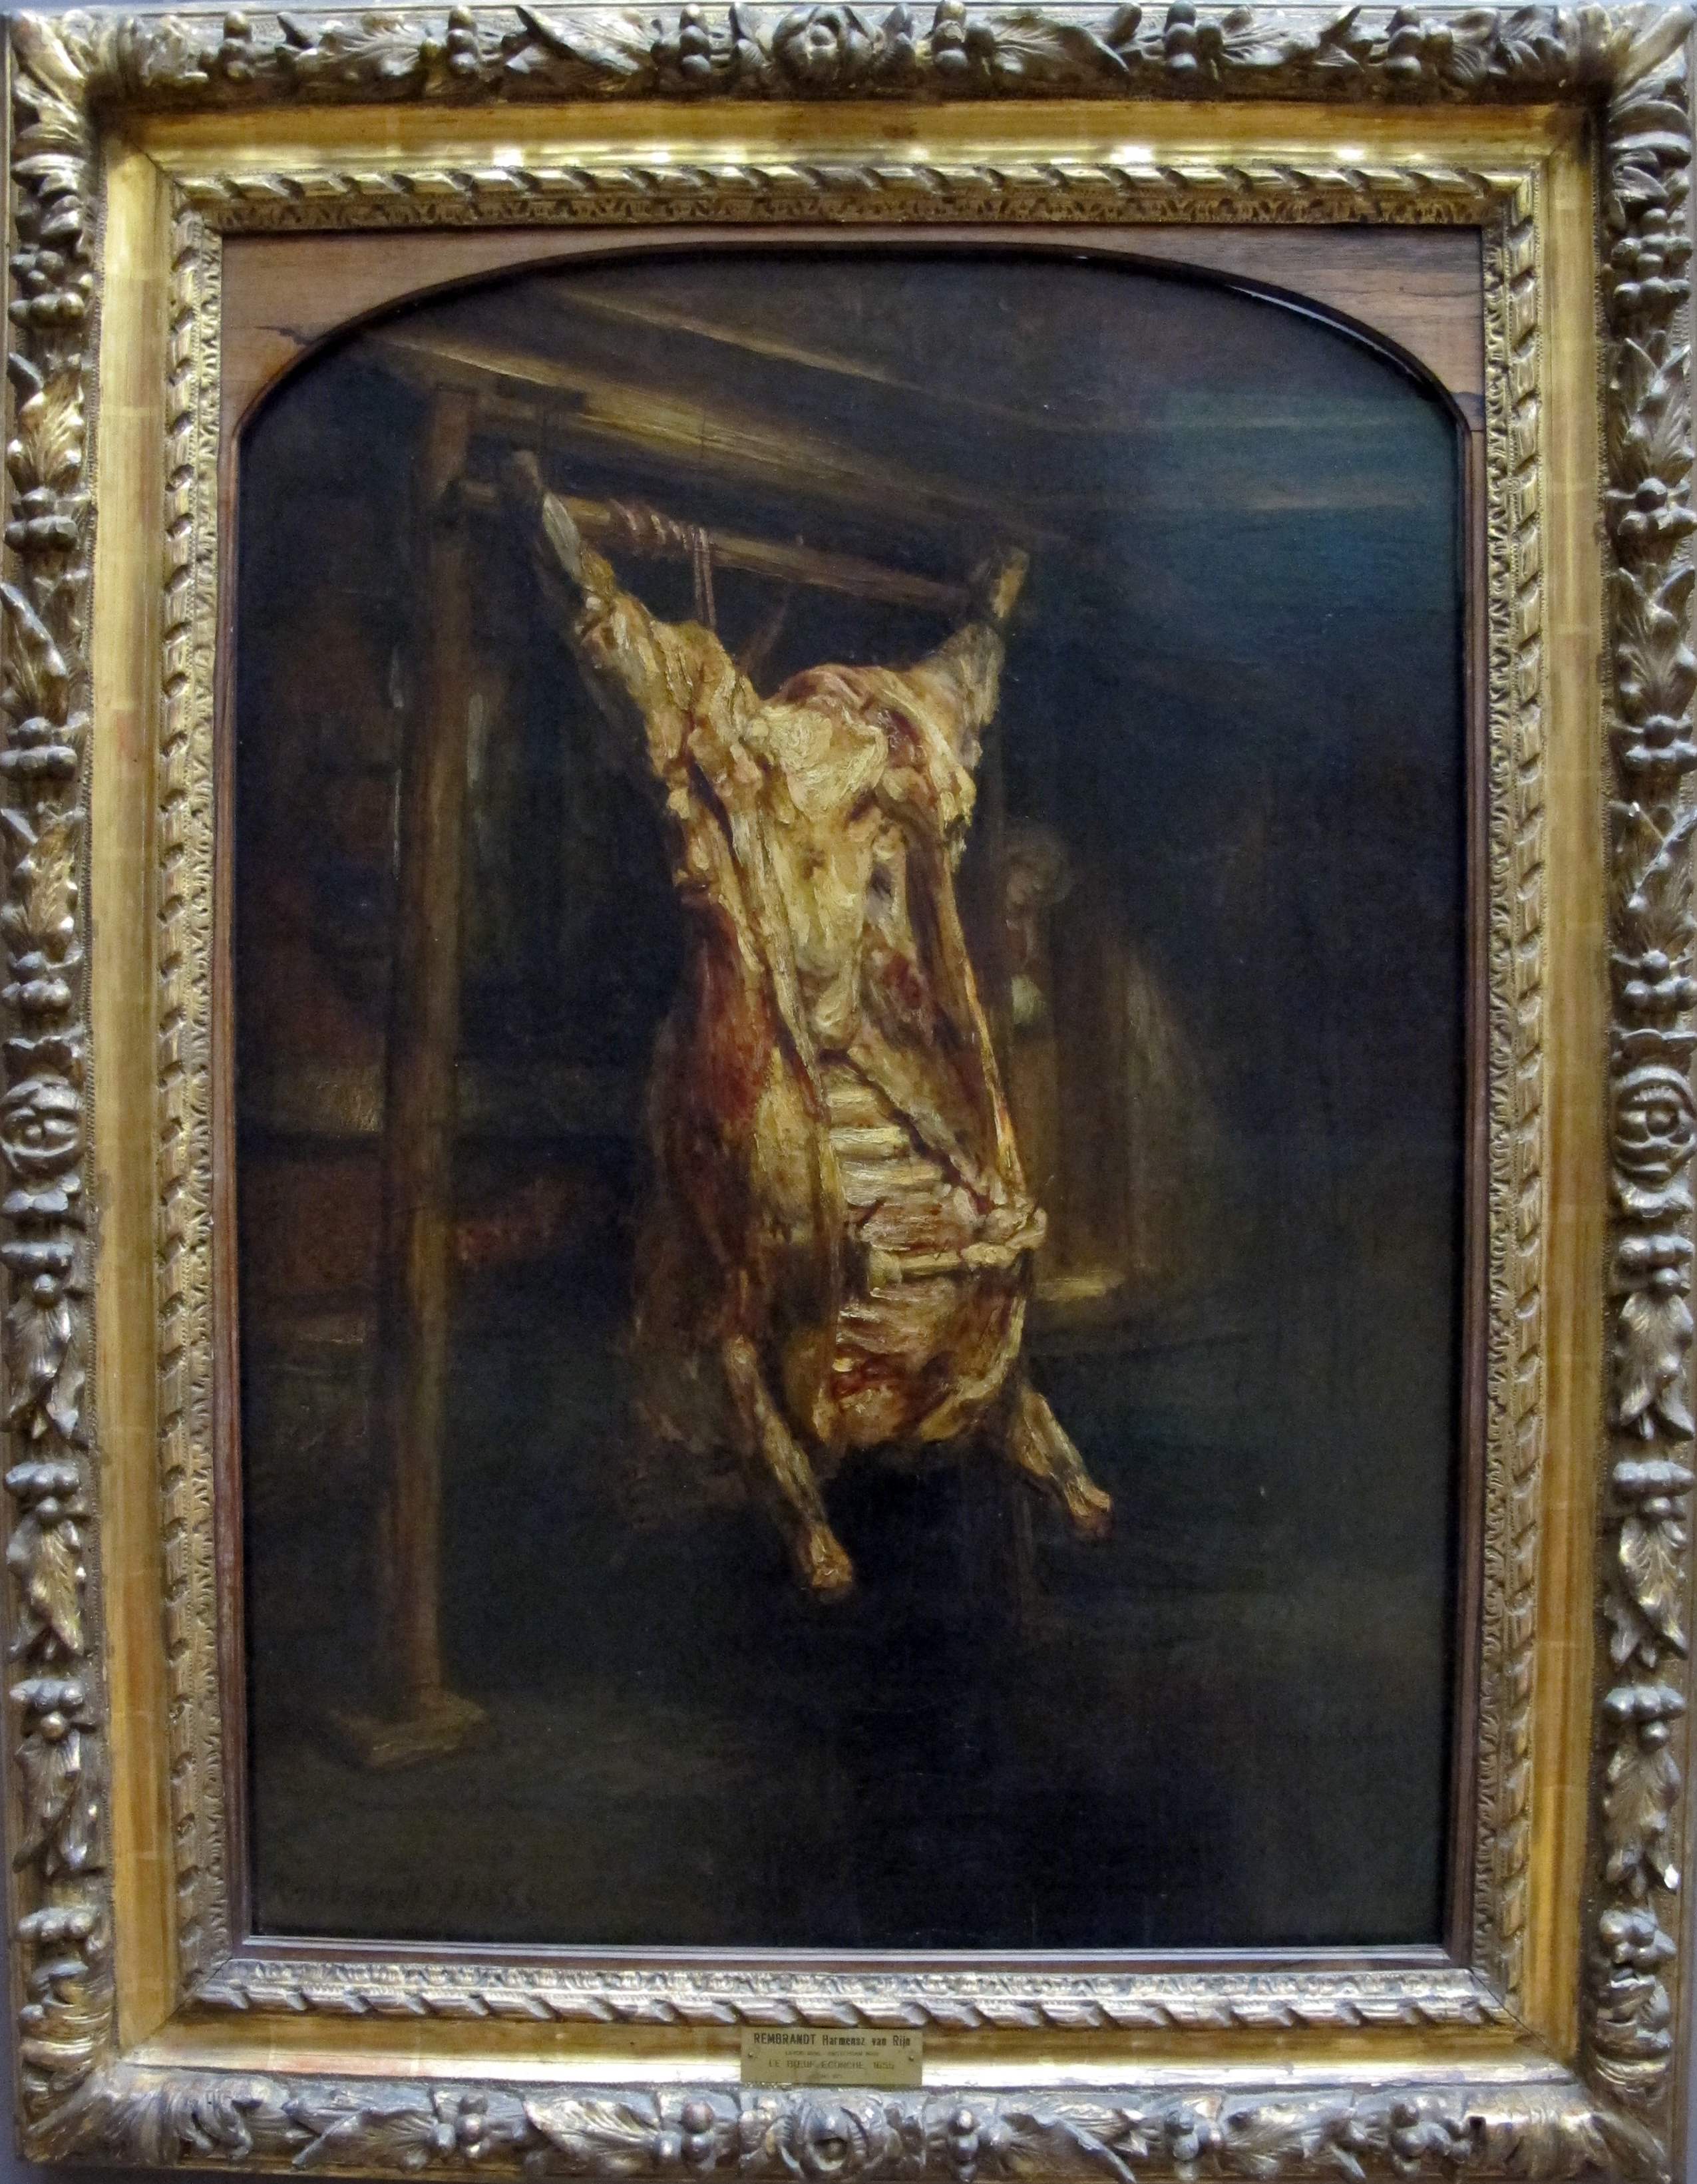 Animal slaughter - Wikipedia